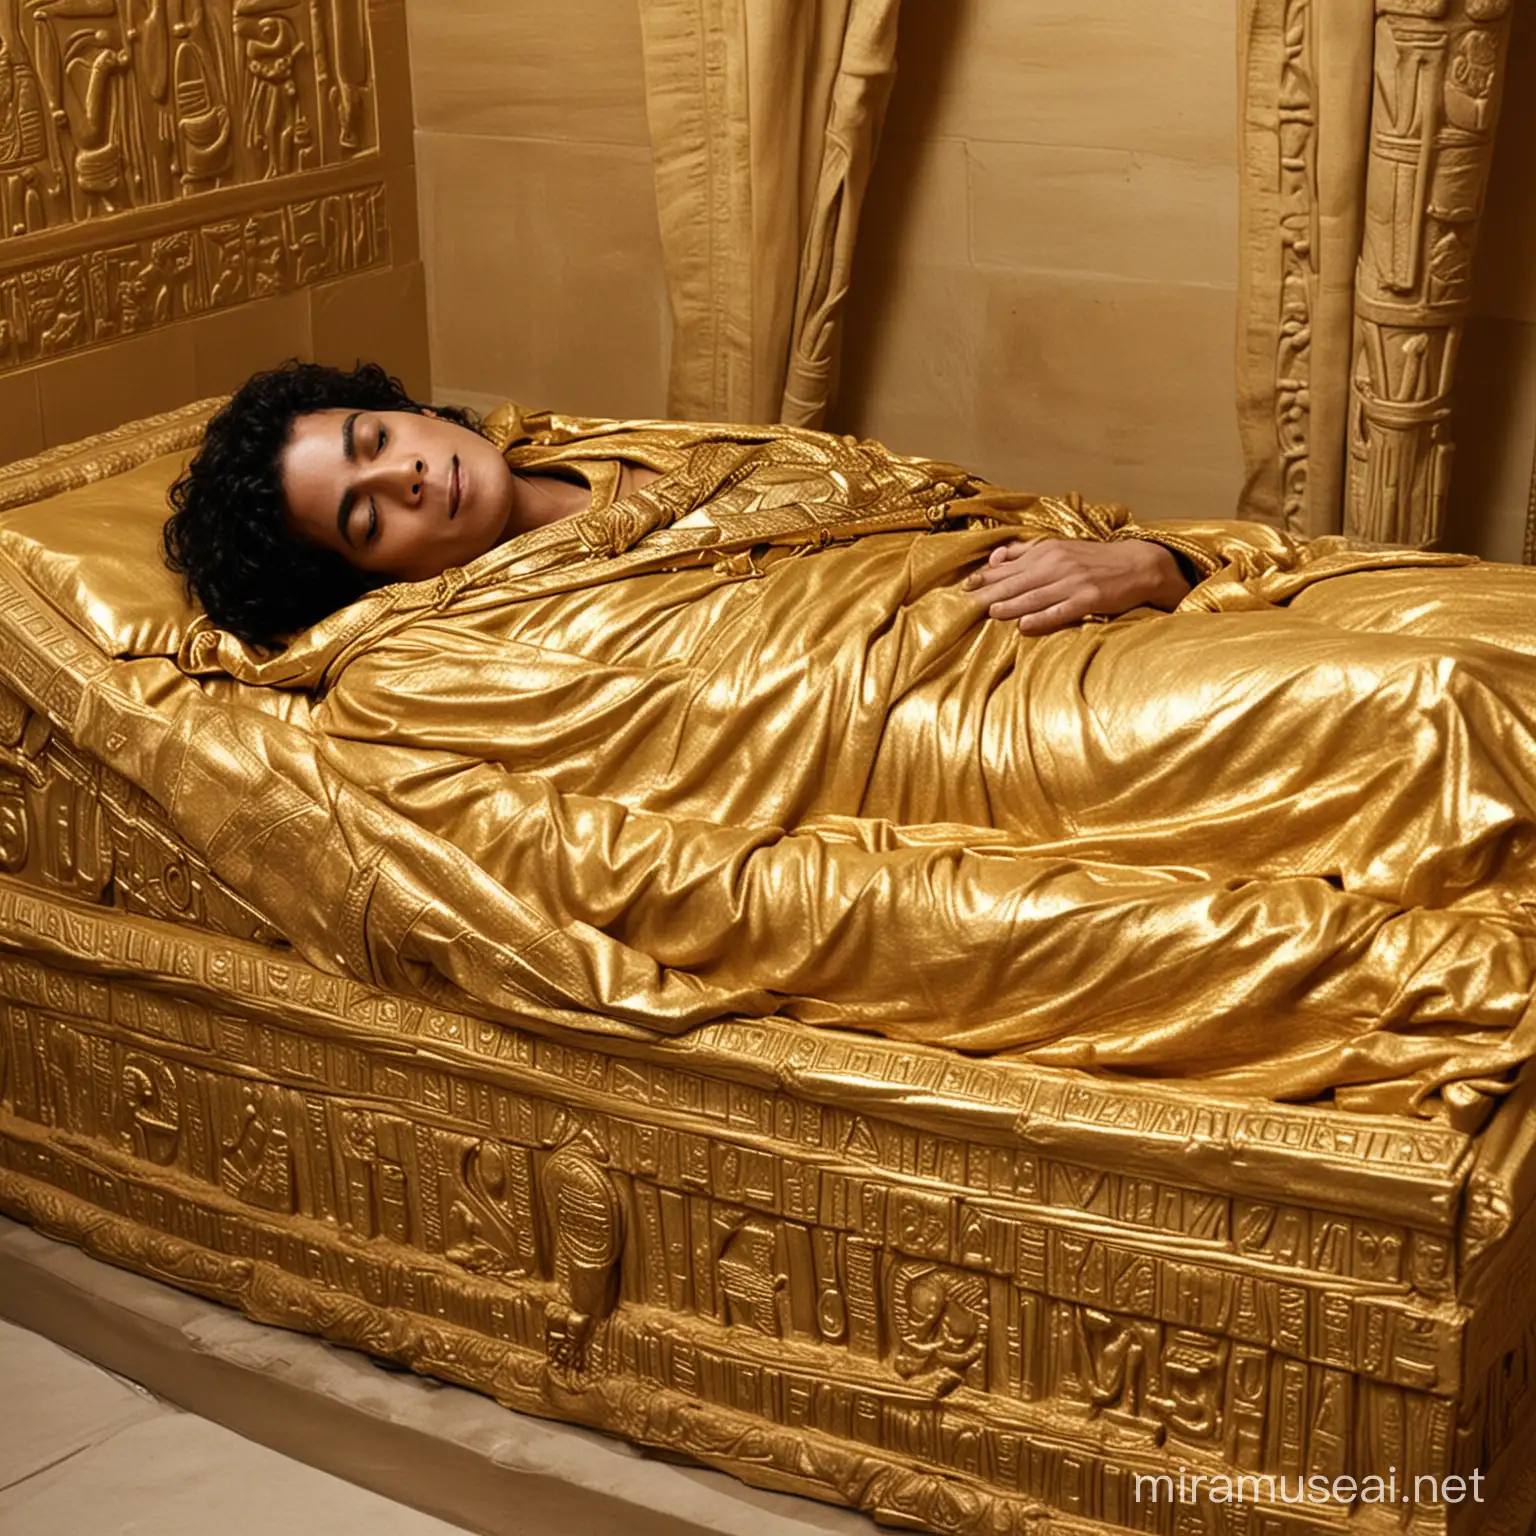 Michael Jackson Sleeping in a Golden Egyptian Sarcophagus